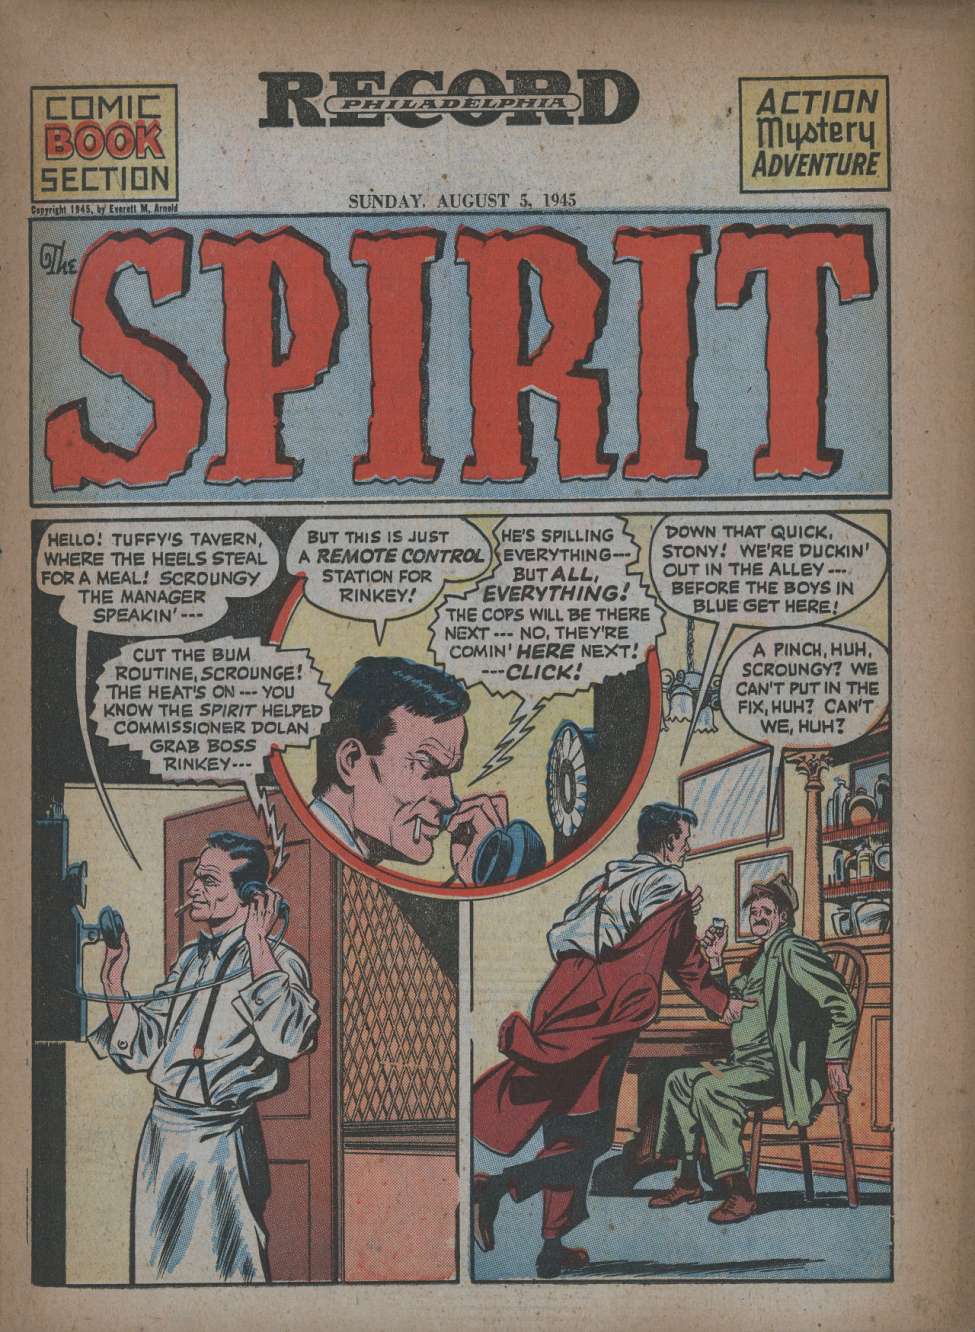 Comic Book Cover For The Spirit (1945-08-05) - Philadelphia Record